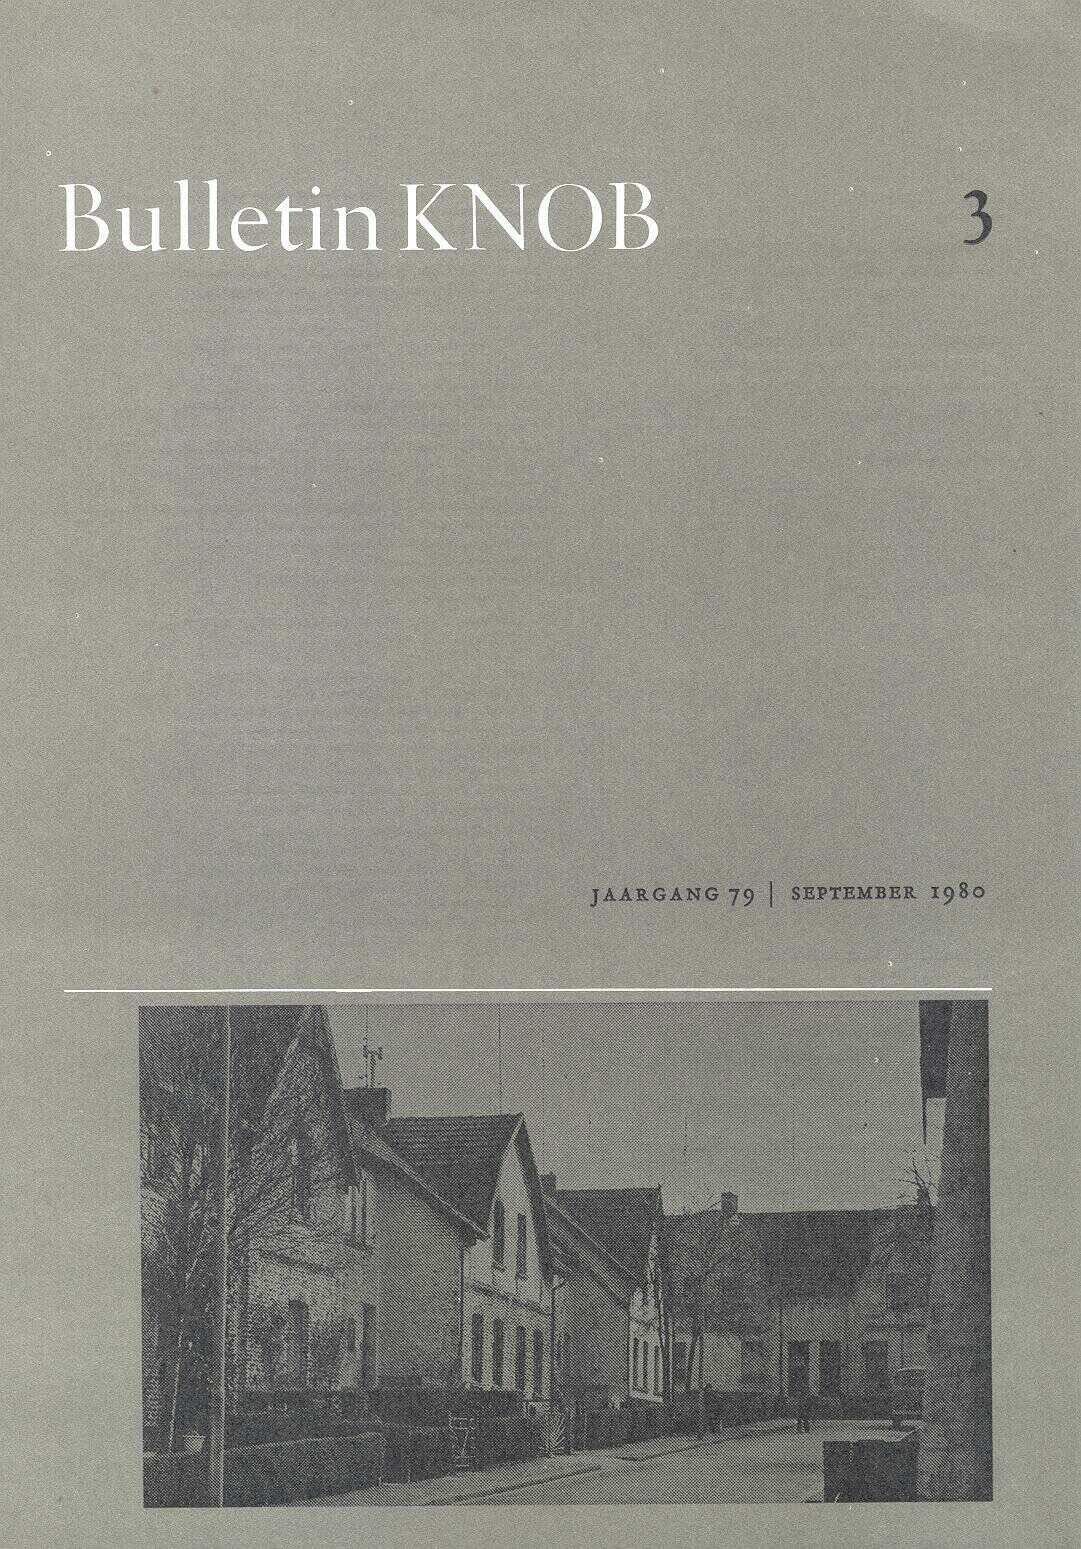 						Toon Bulletin KNOB 79 (1980) 3
					